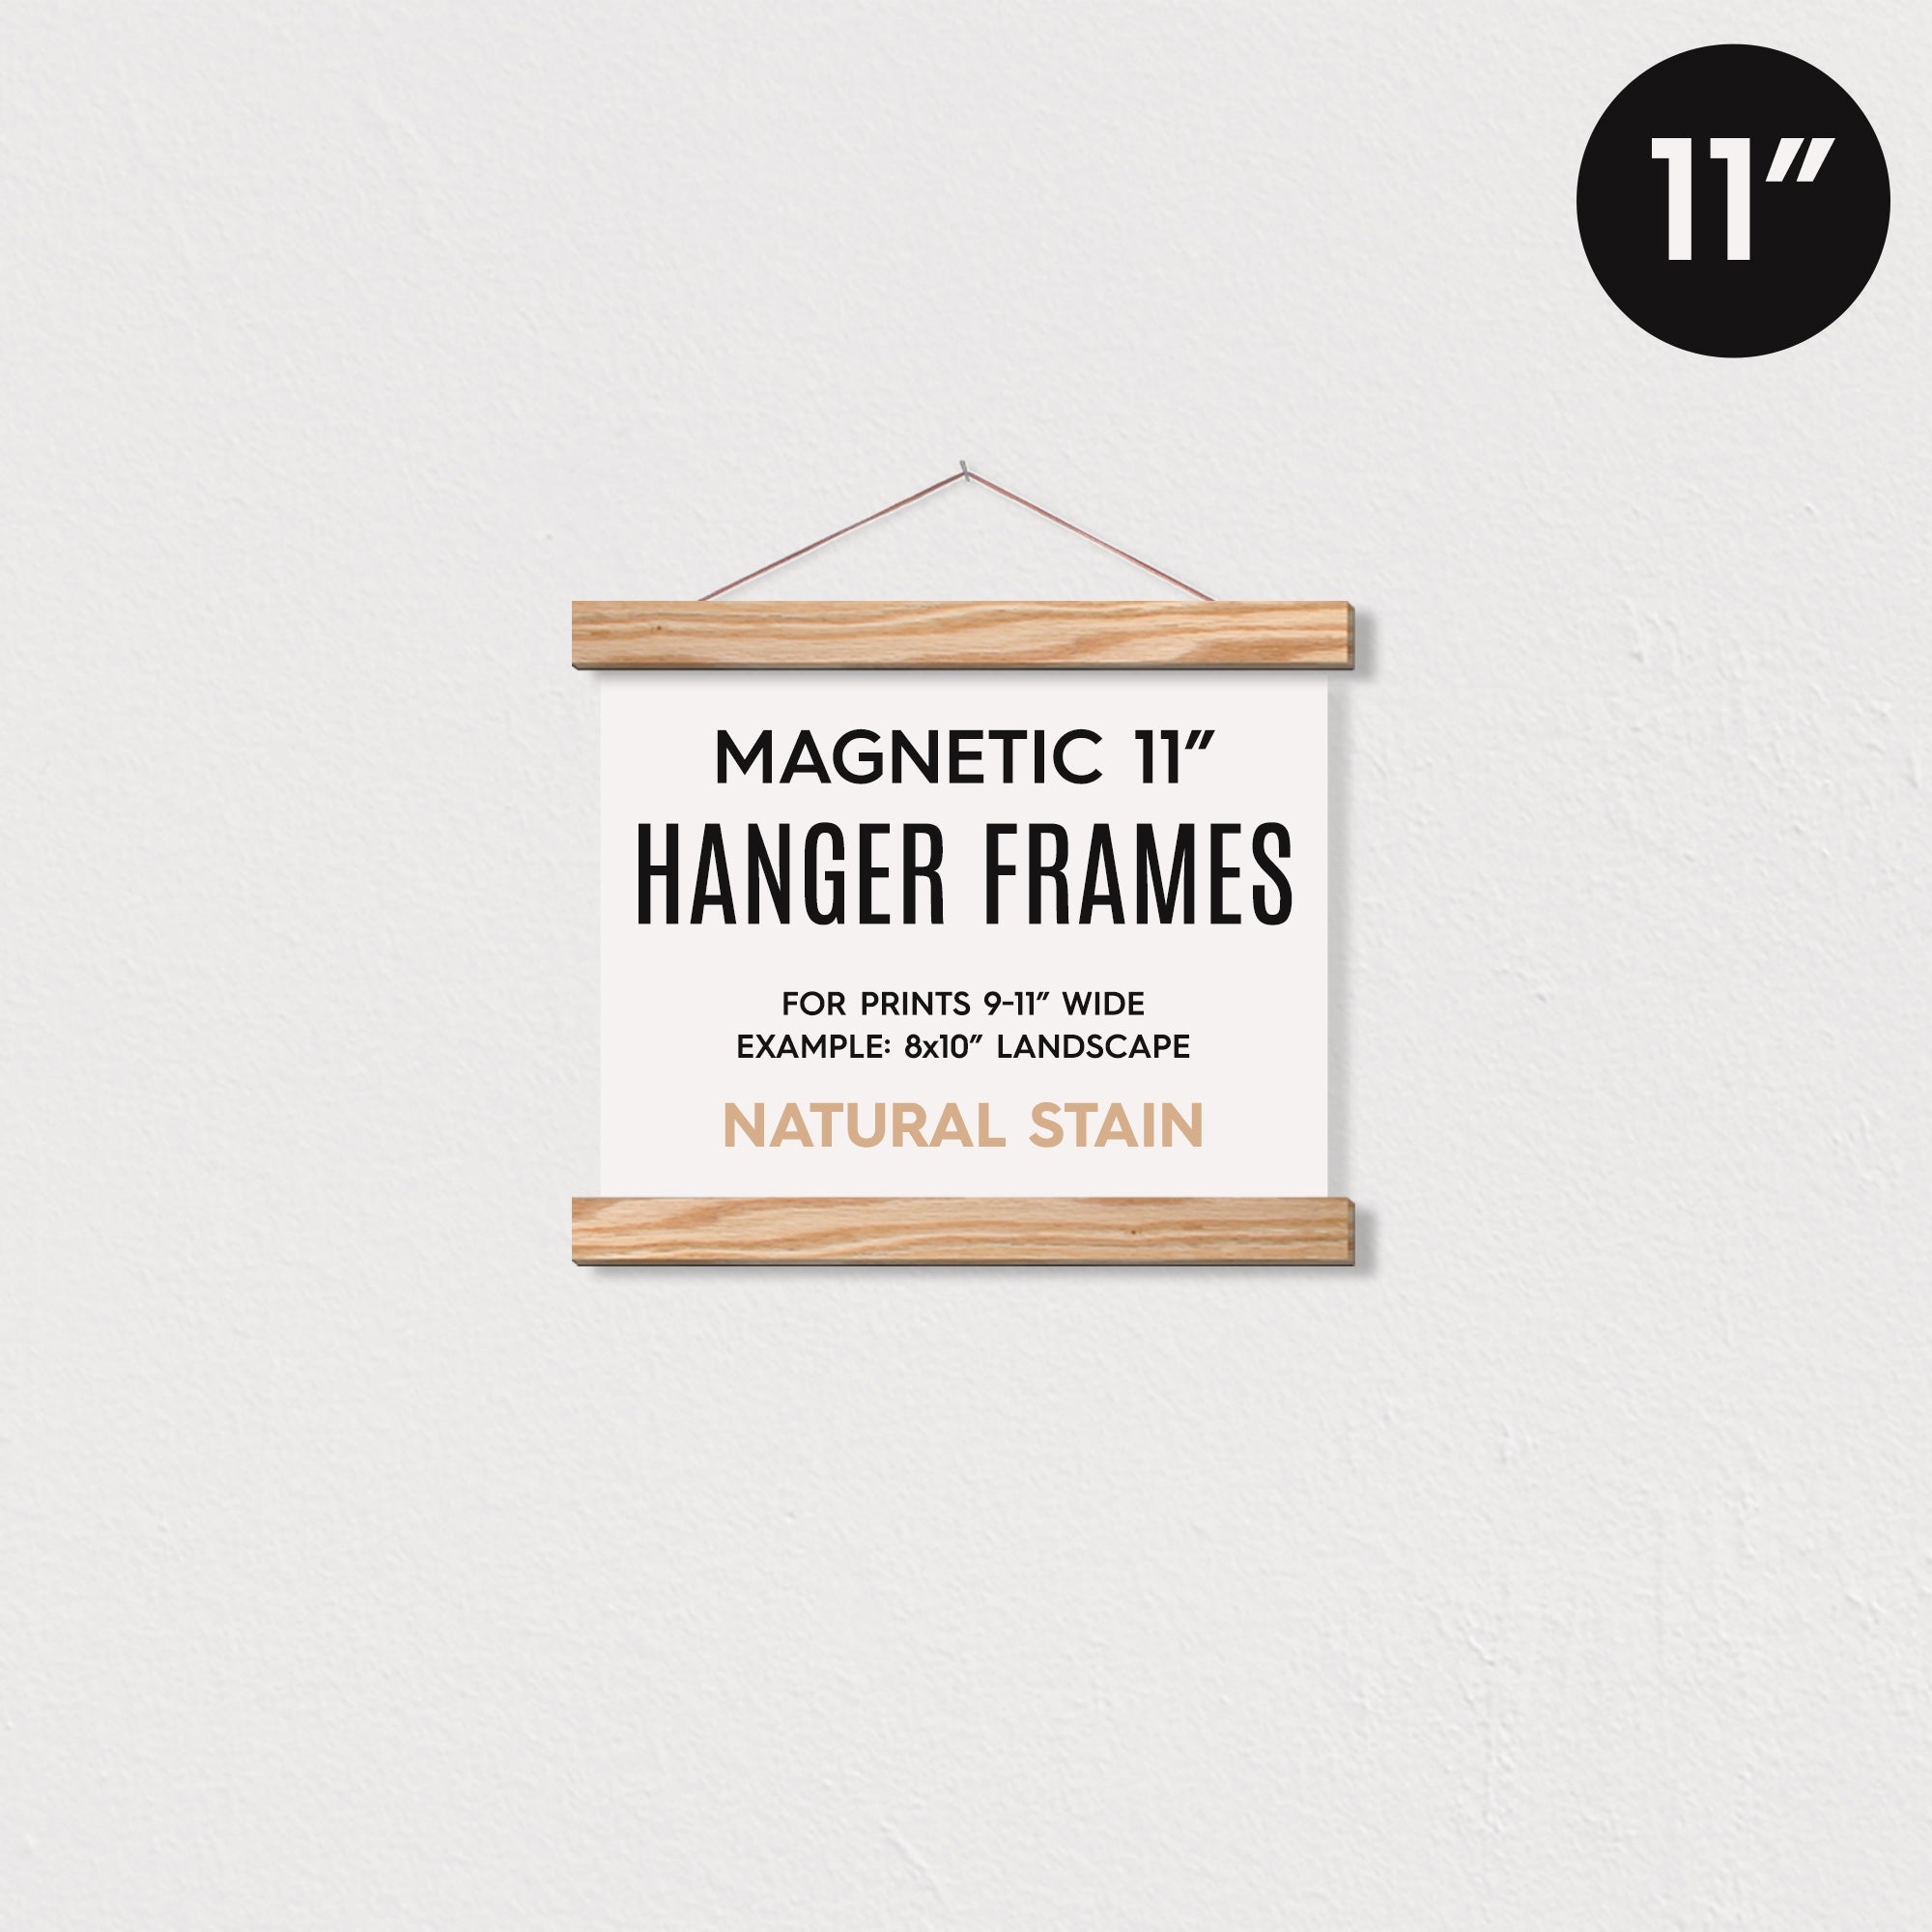 MAGNETIC Poster Hanger Frame